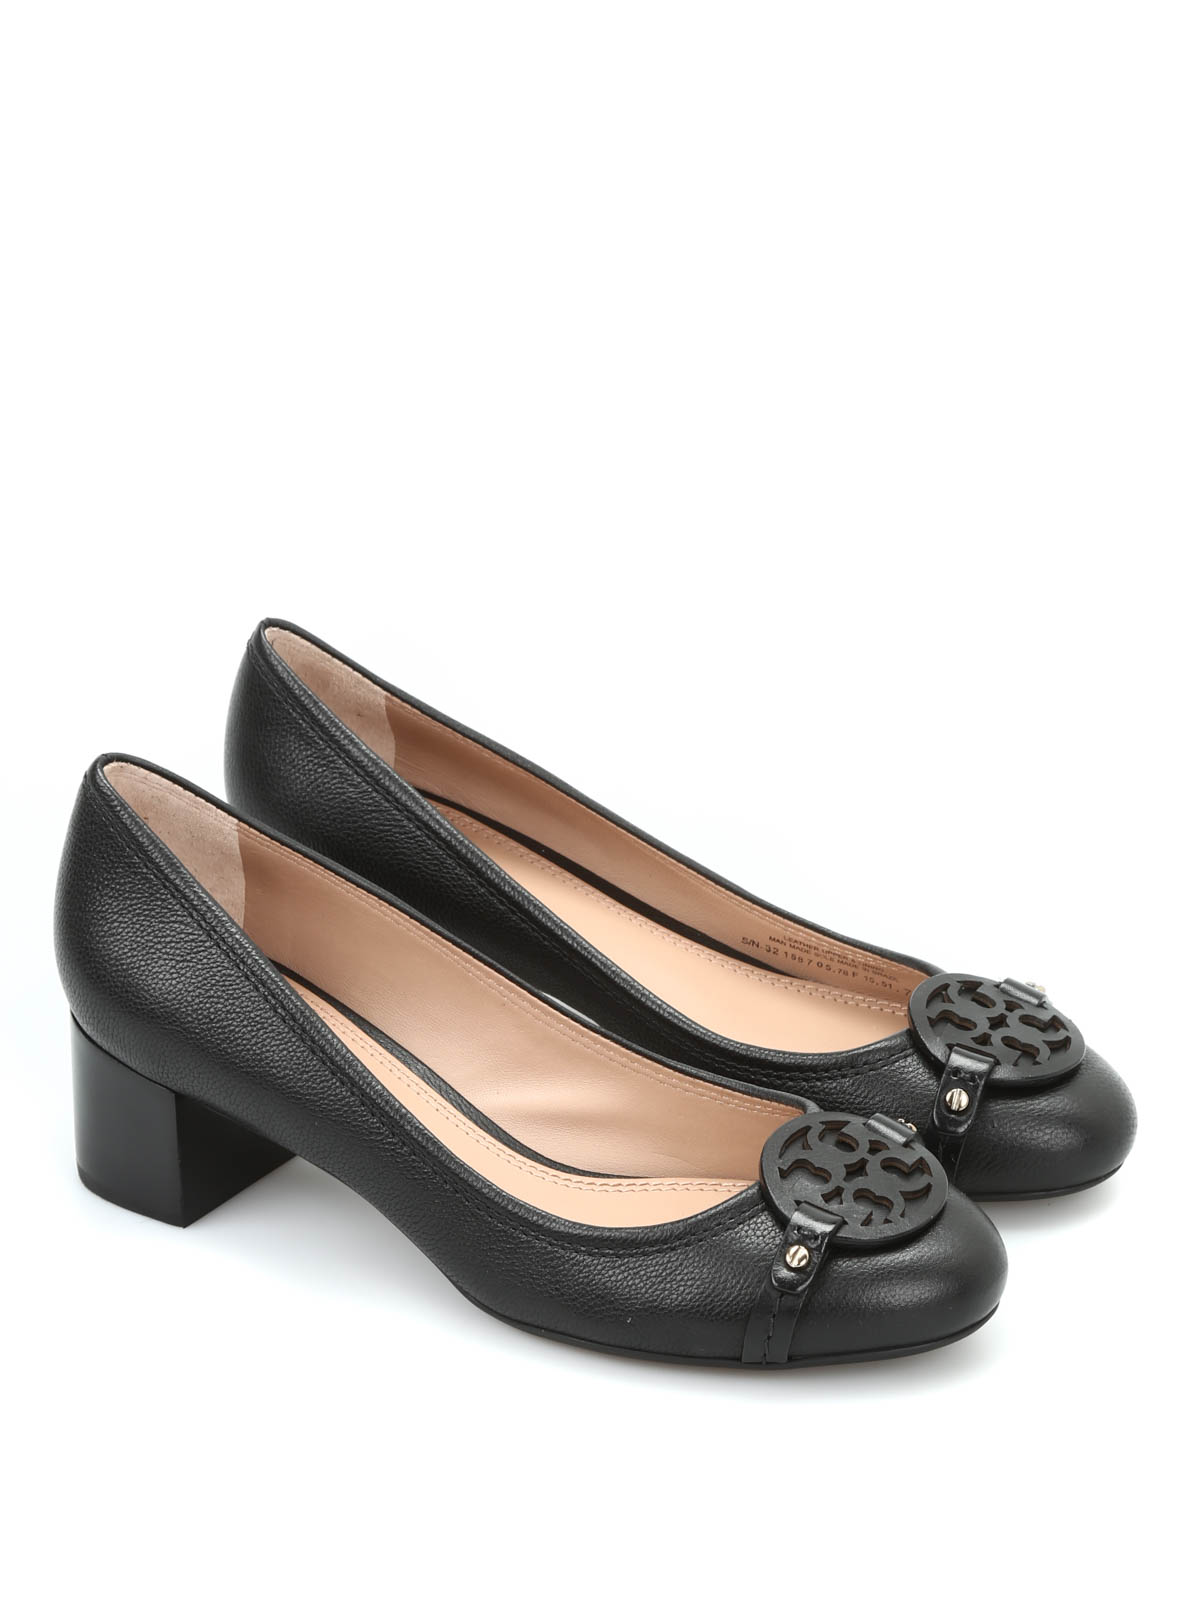 Court shoes Tory Burch - Mini Miller leather pumps - 32158705001